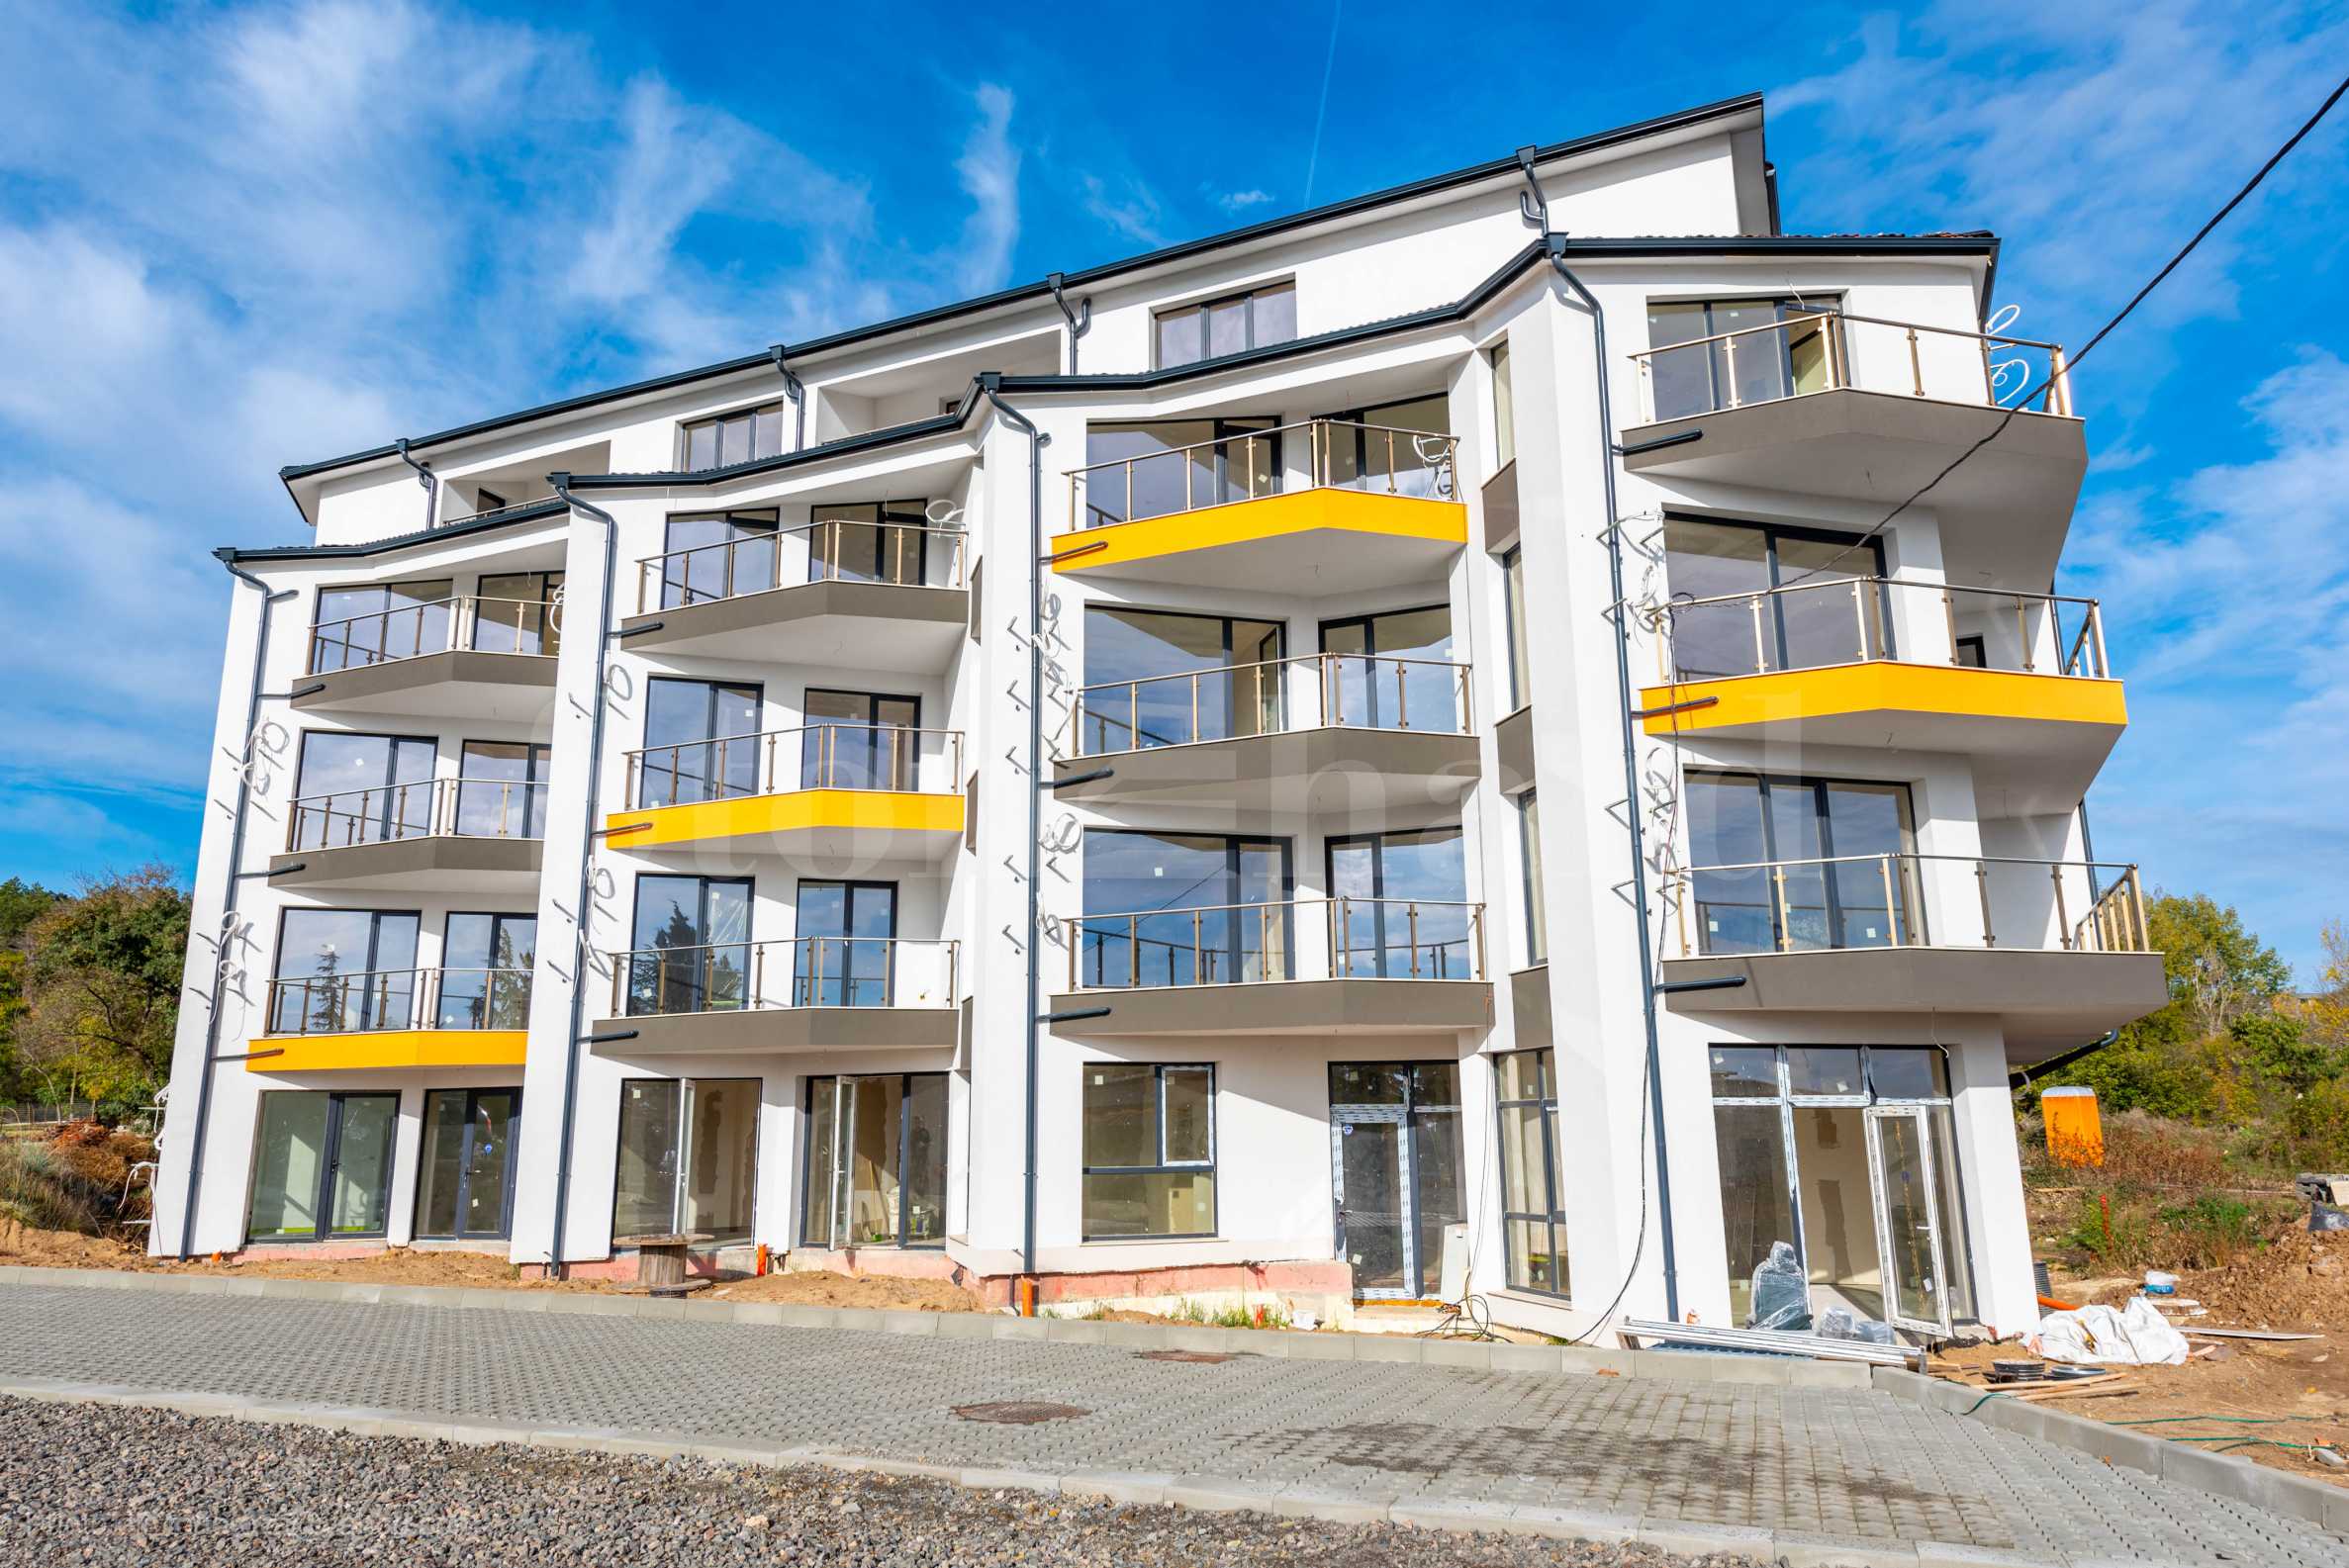 Comfortable apartments 200 meters from Kavatsi beach1 - Stonehard